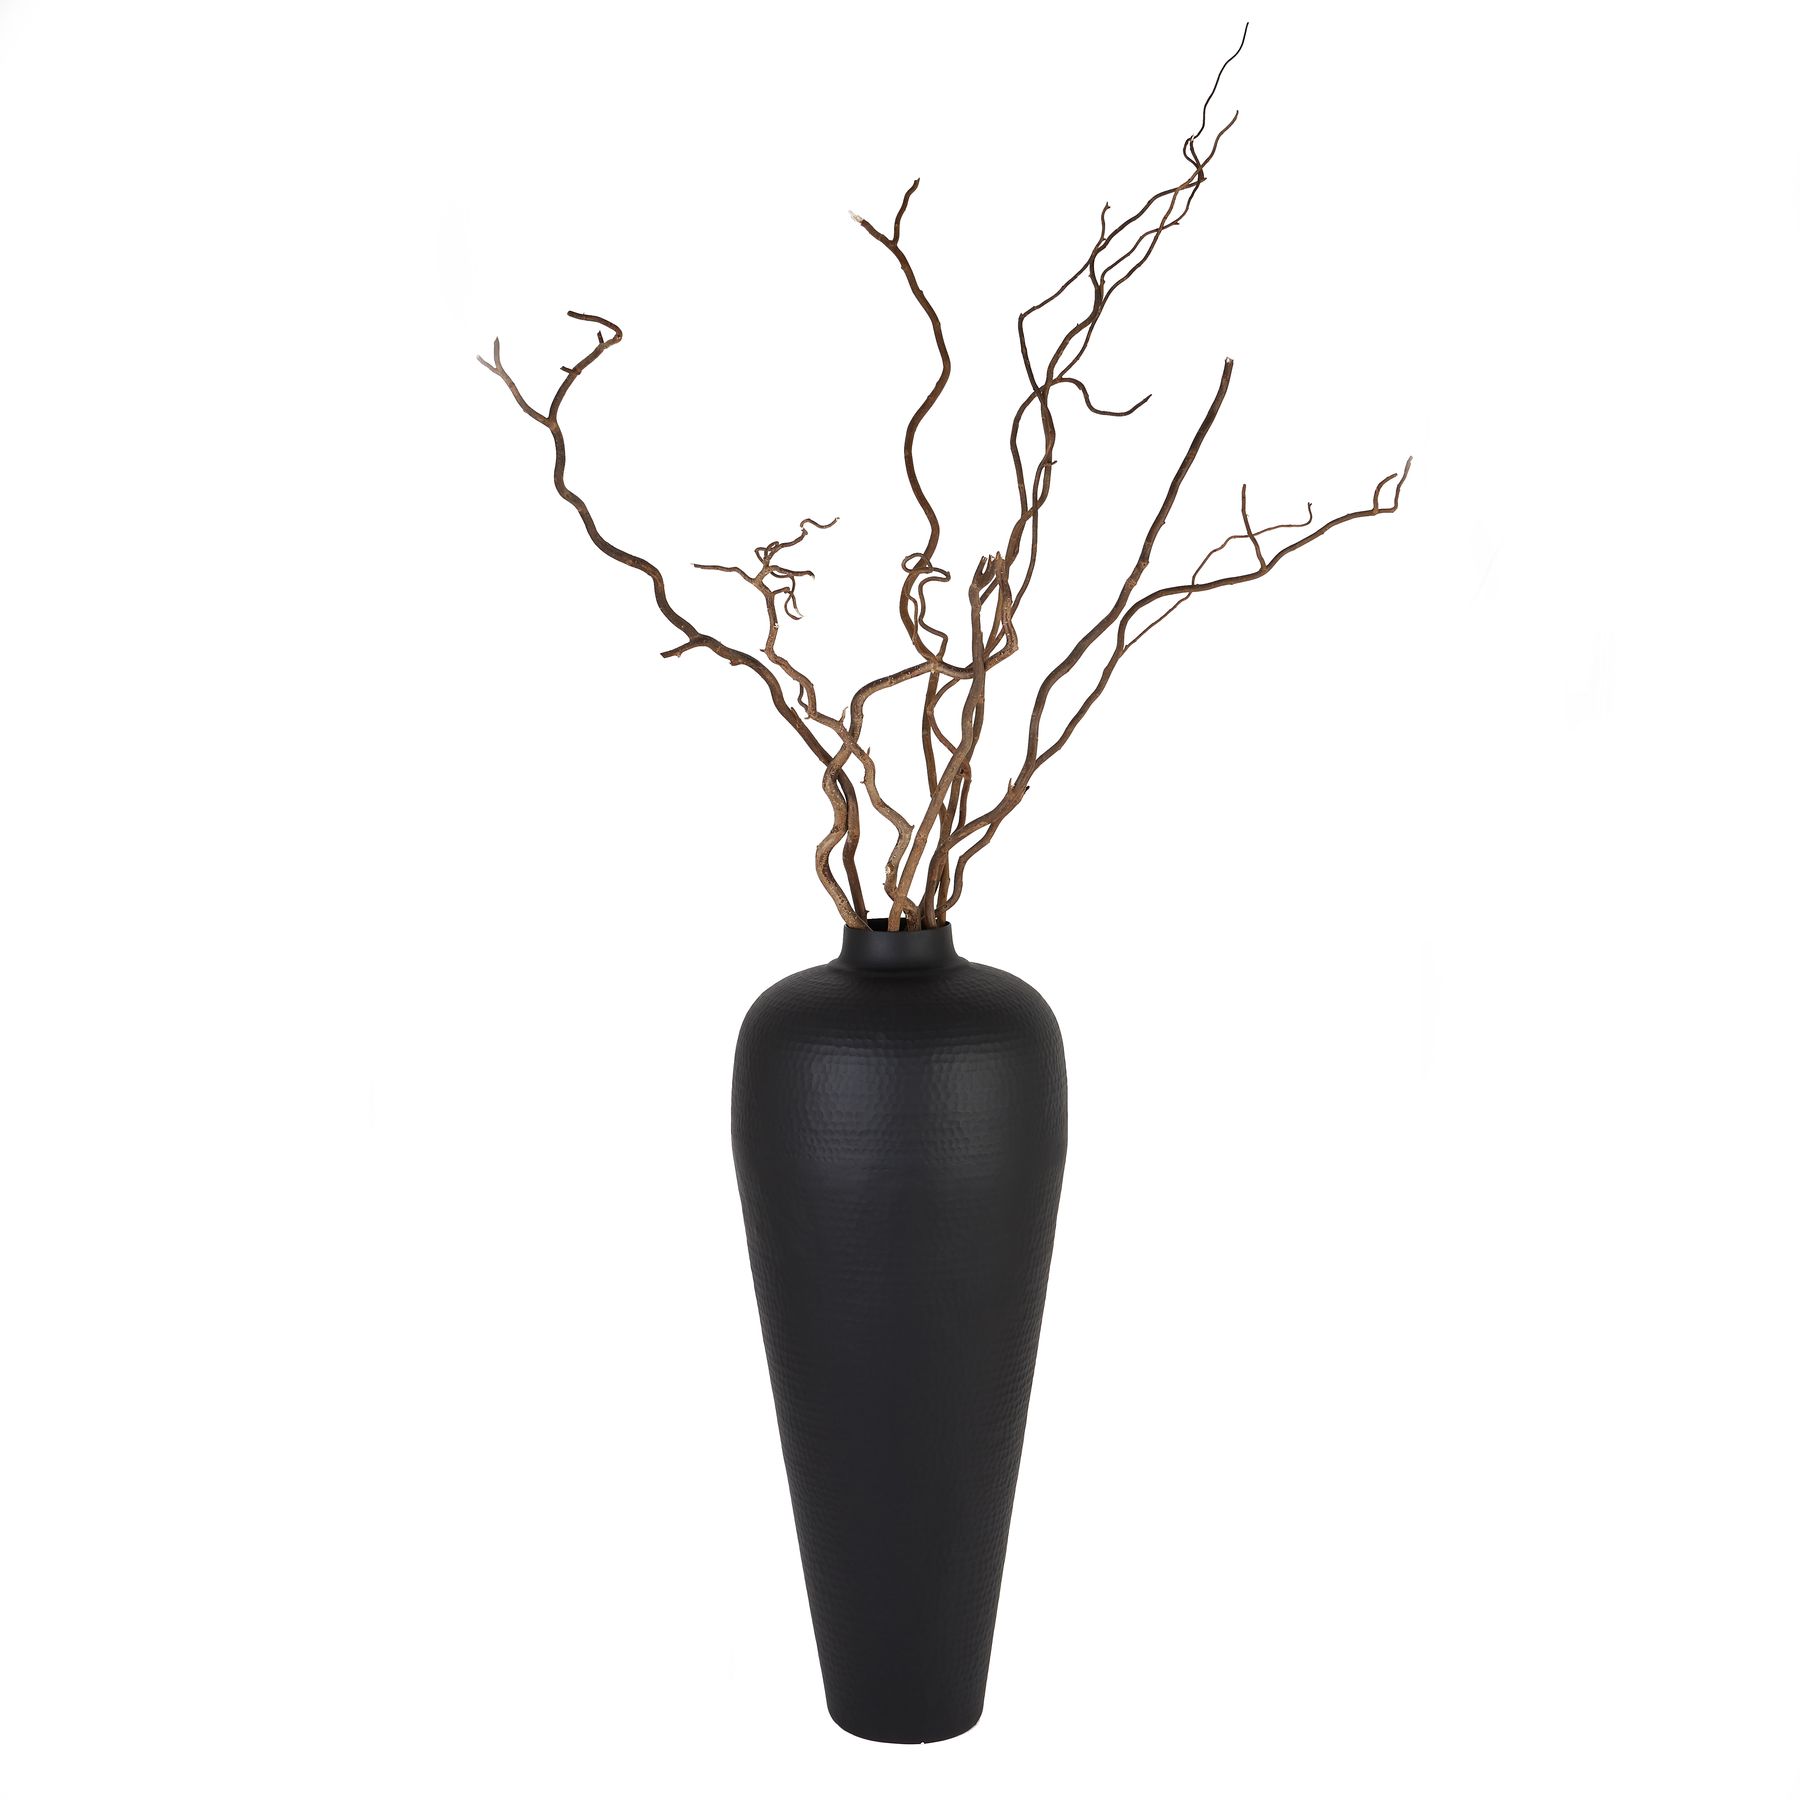 Matt Black Medium Hammered Vase Without Lid - Image 3